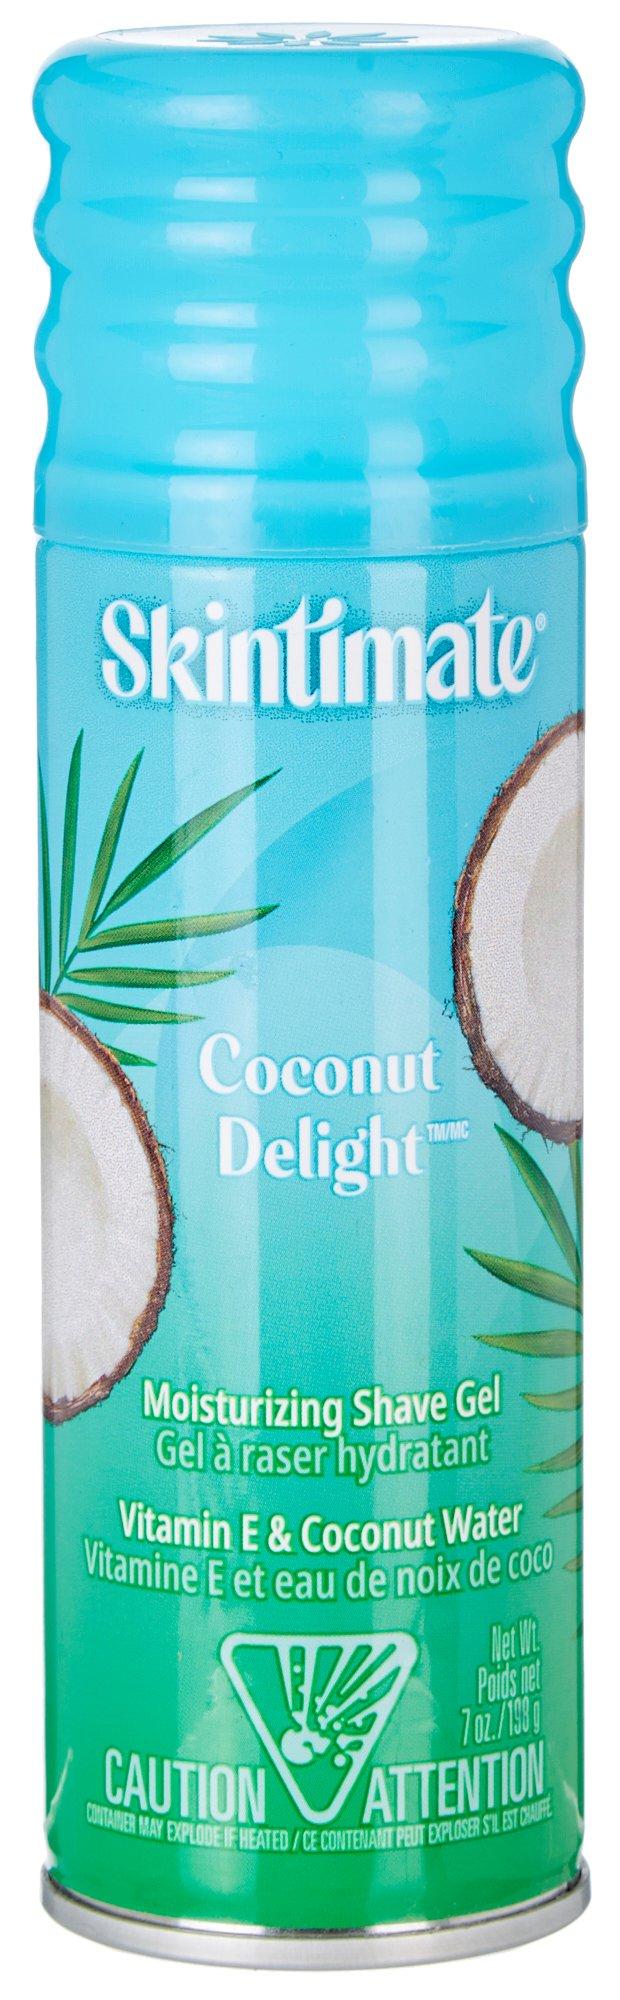 Coconut Delight Moisturizing Shave Gel 7 oz.